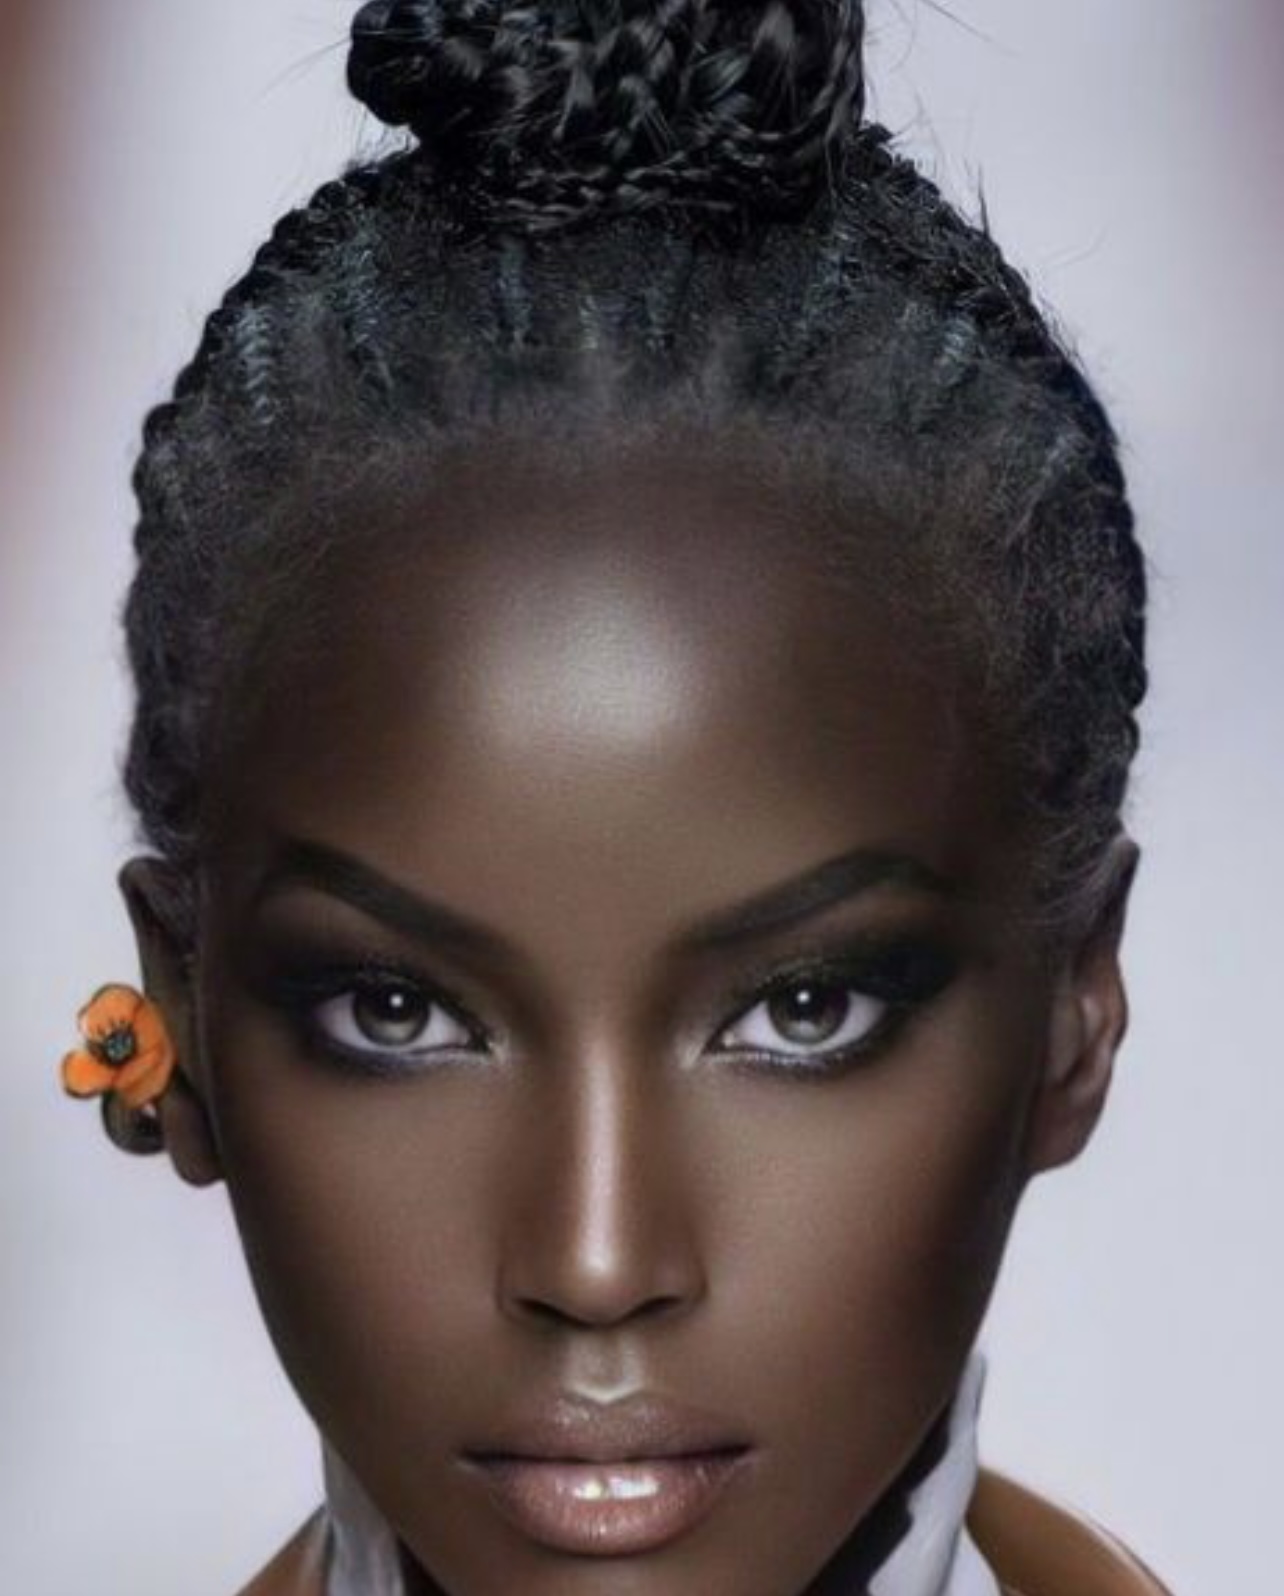 Beatiful color of eyes of black women2